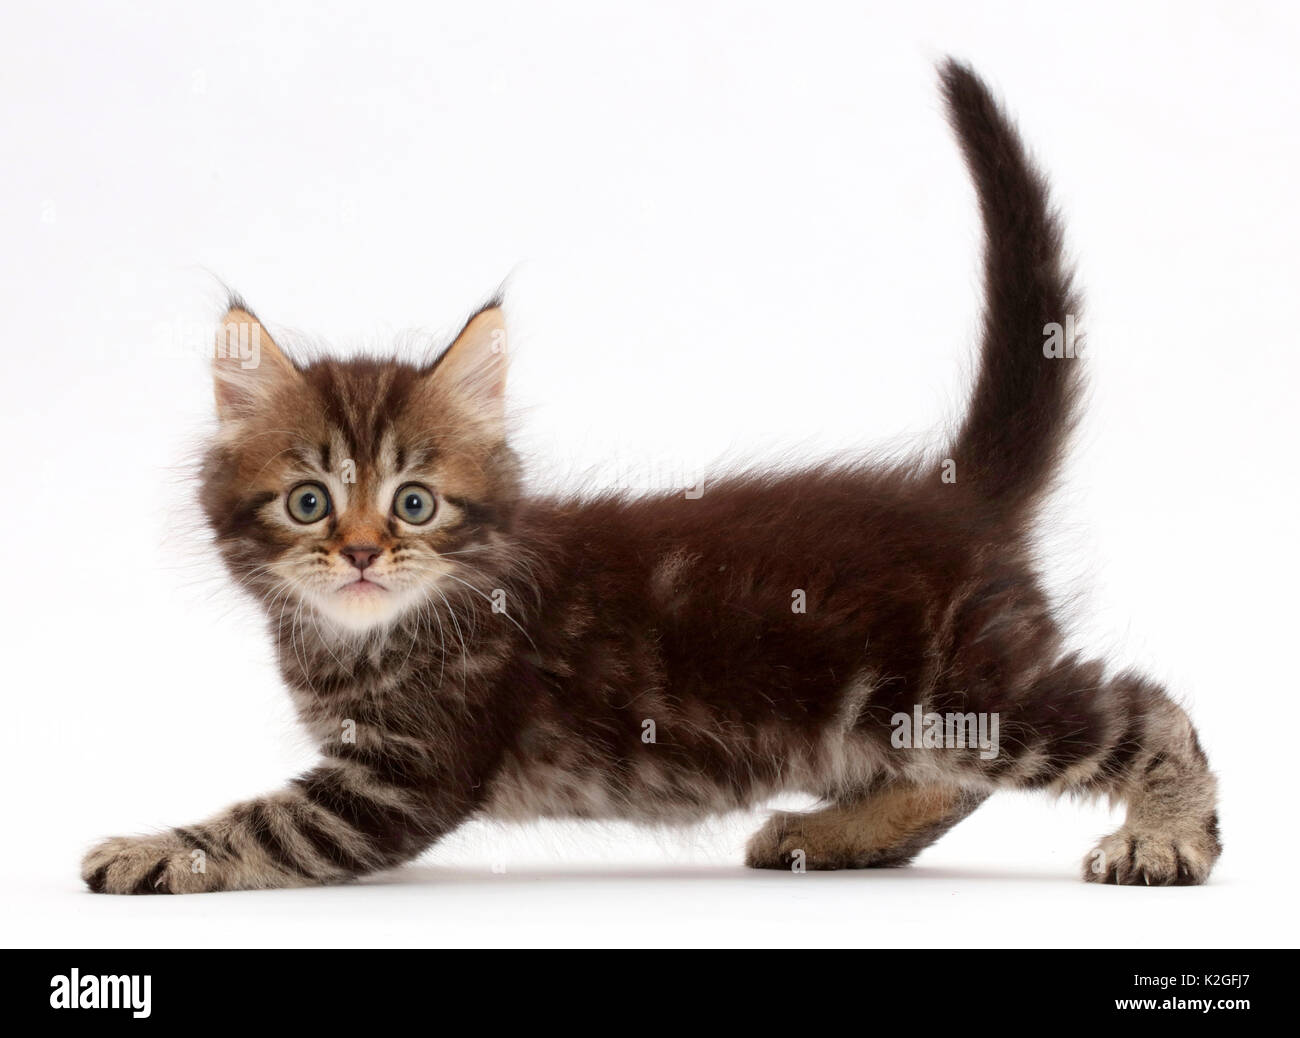 Tabby Persian-cross kitten, age 7 weeks, looking startled Stock Photo